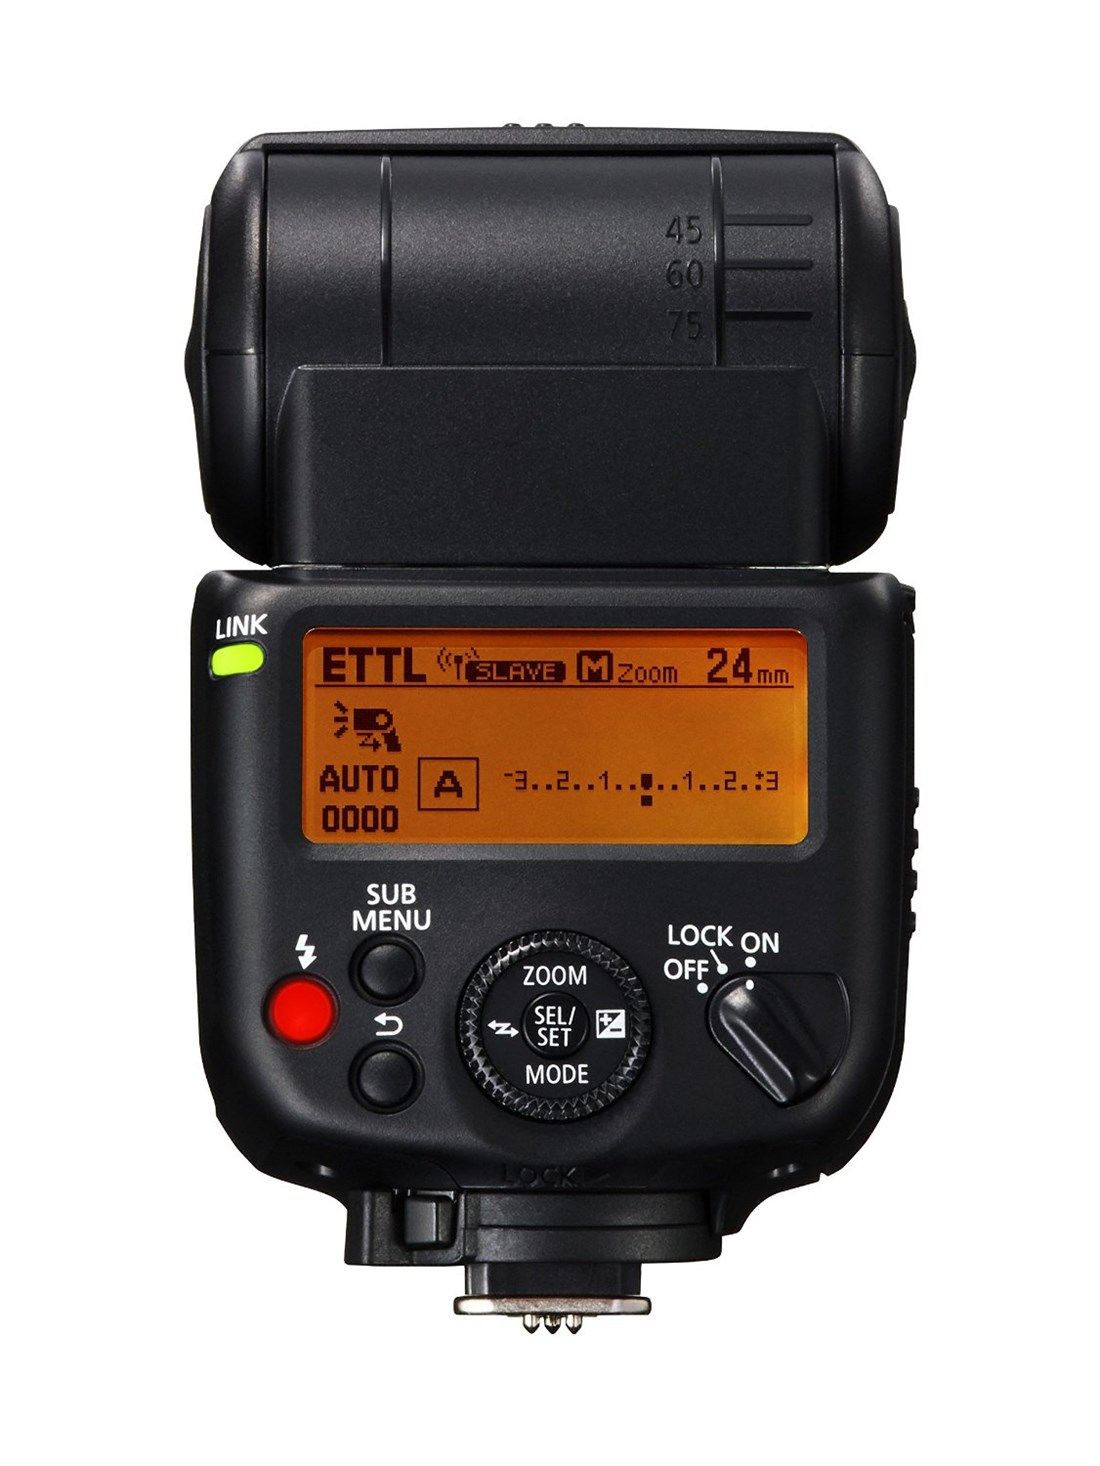 Clearance Canon Speedlite 430EX III-RT Flash (CLEARANCE2300)